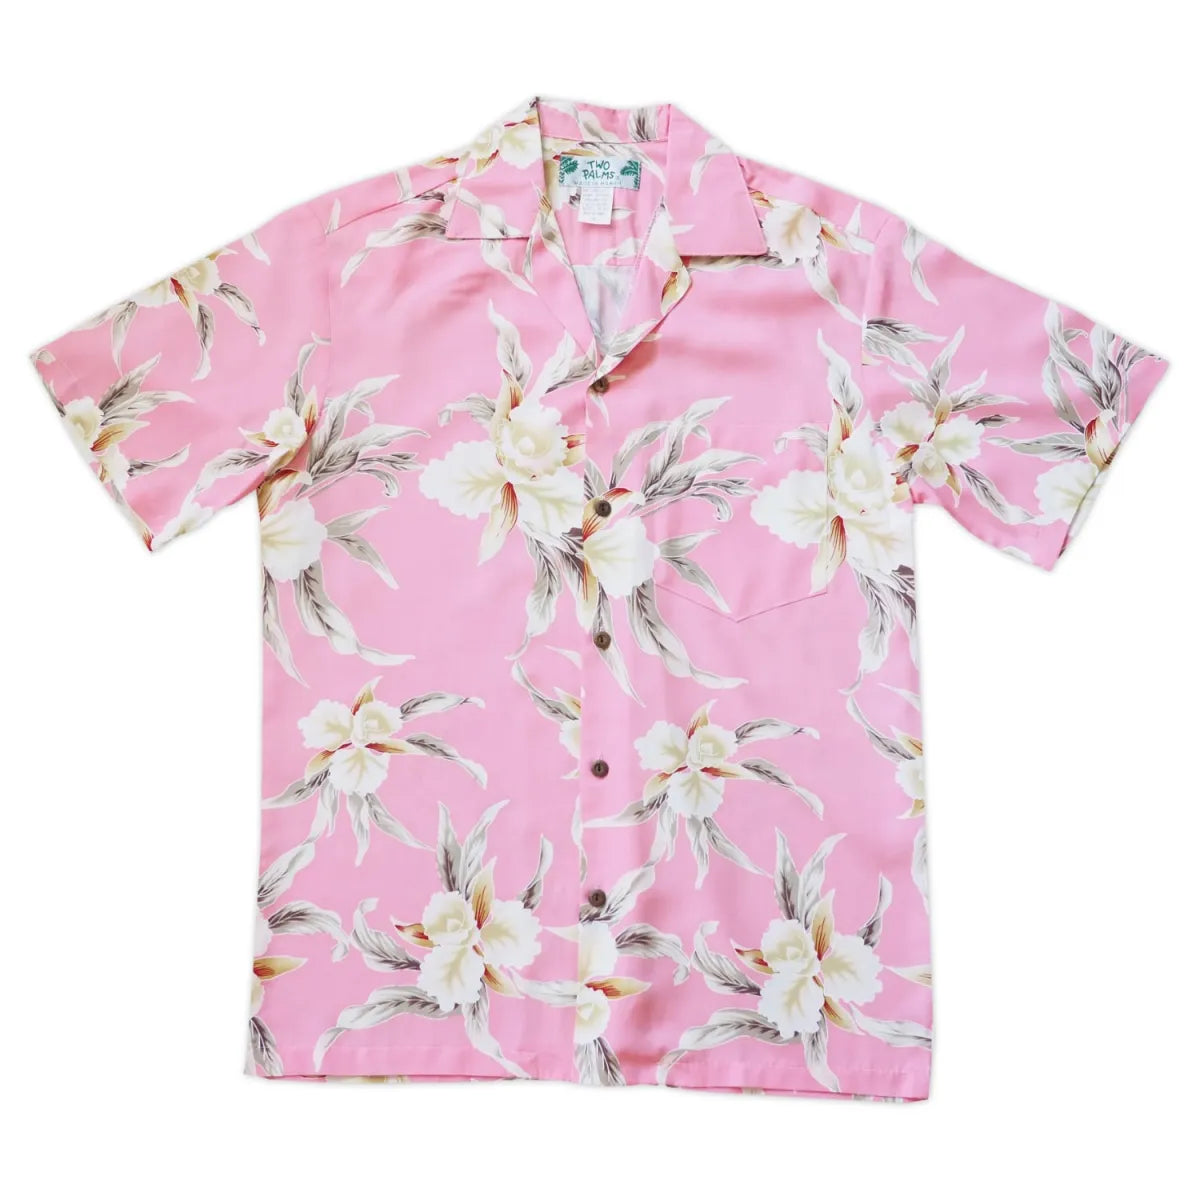 Mele pink hawaiian rayon shirt